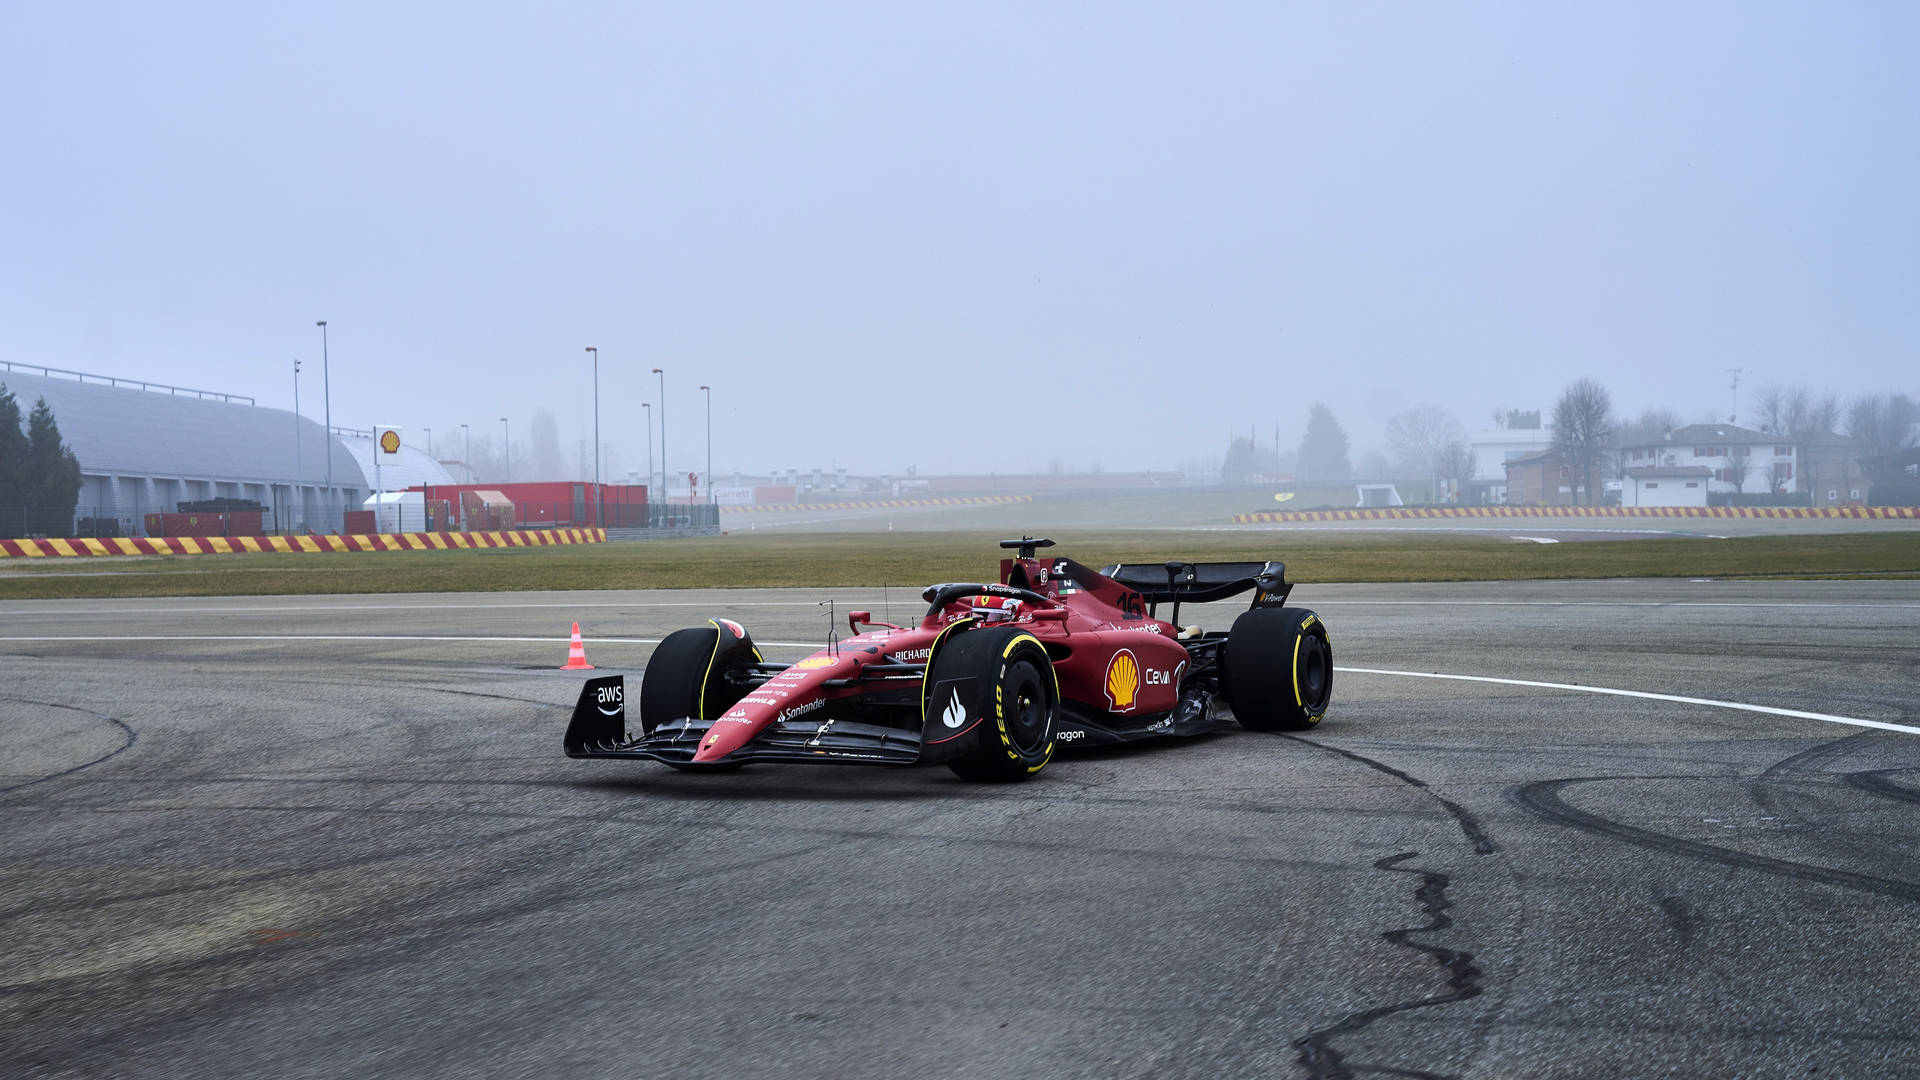 Ferrari F1 Car Driving On A Track In The Fog Background